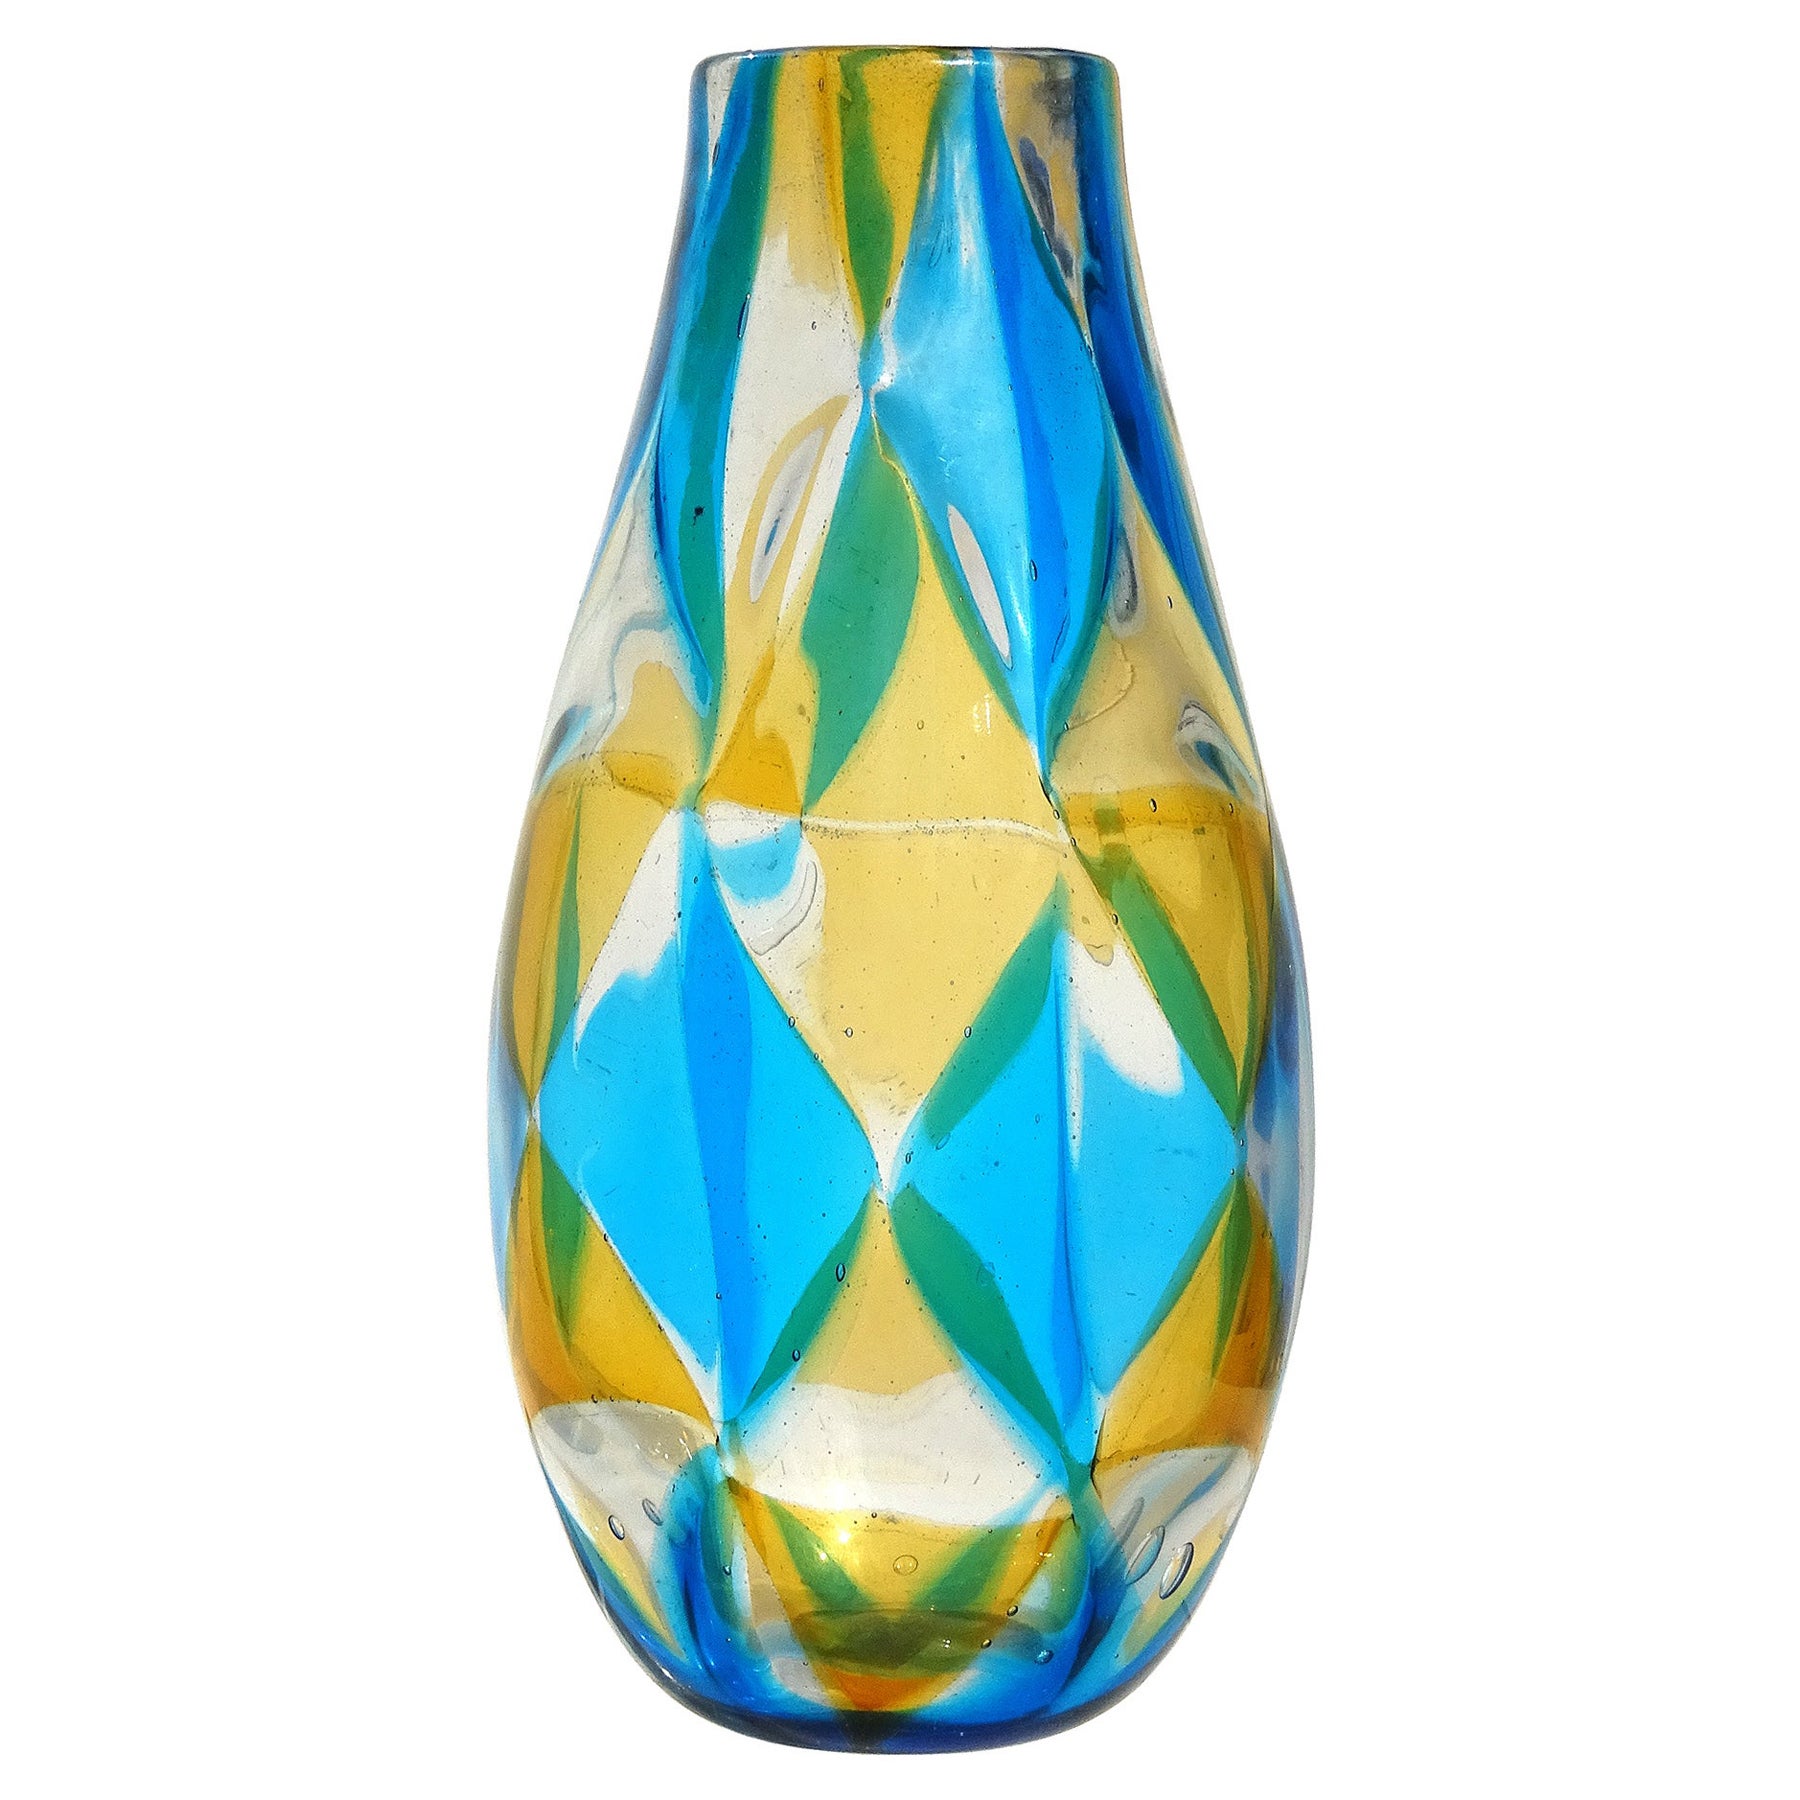 Barovier Toso Murano Intarsio Mosaic Triangle Tessere Italian Art Glass Vase